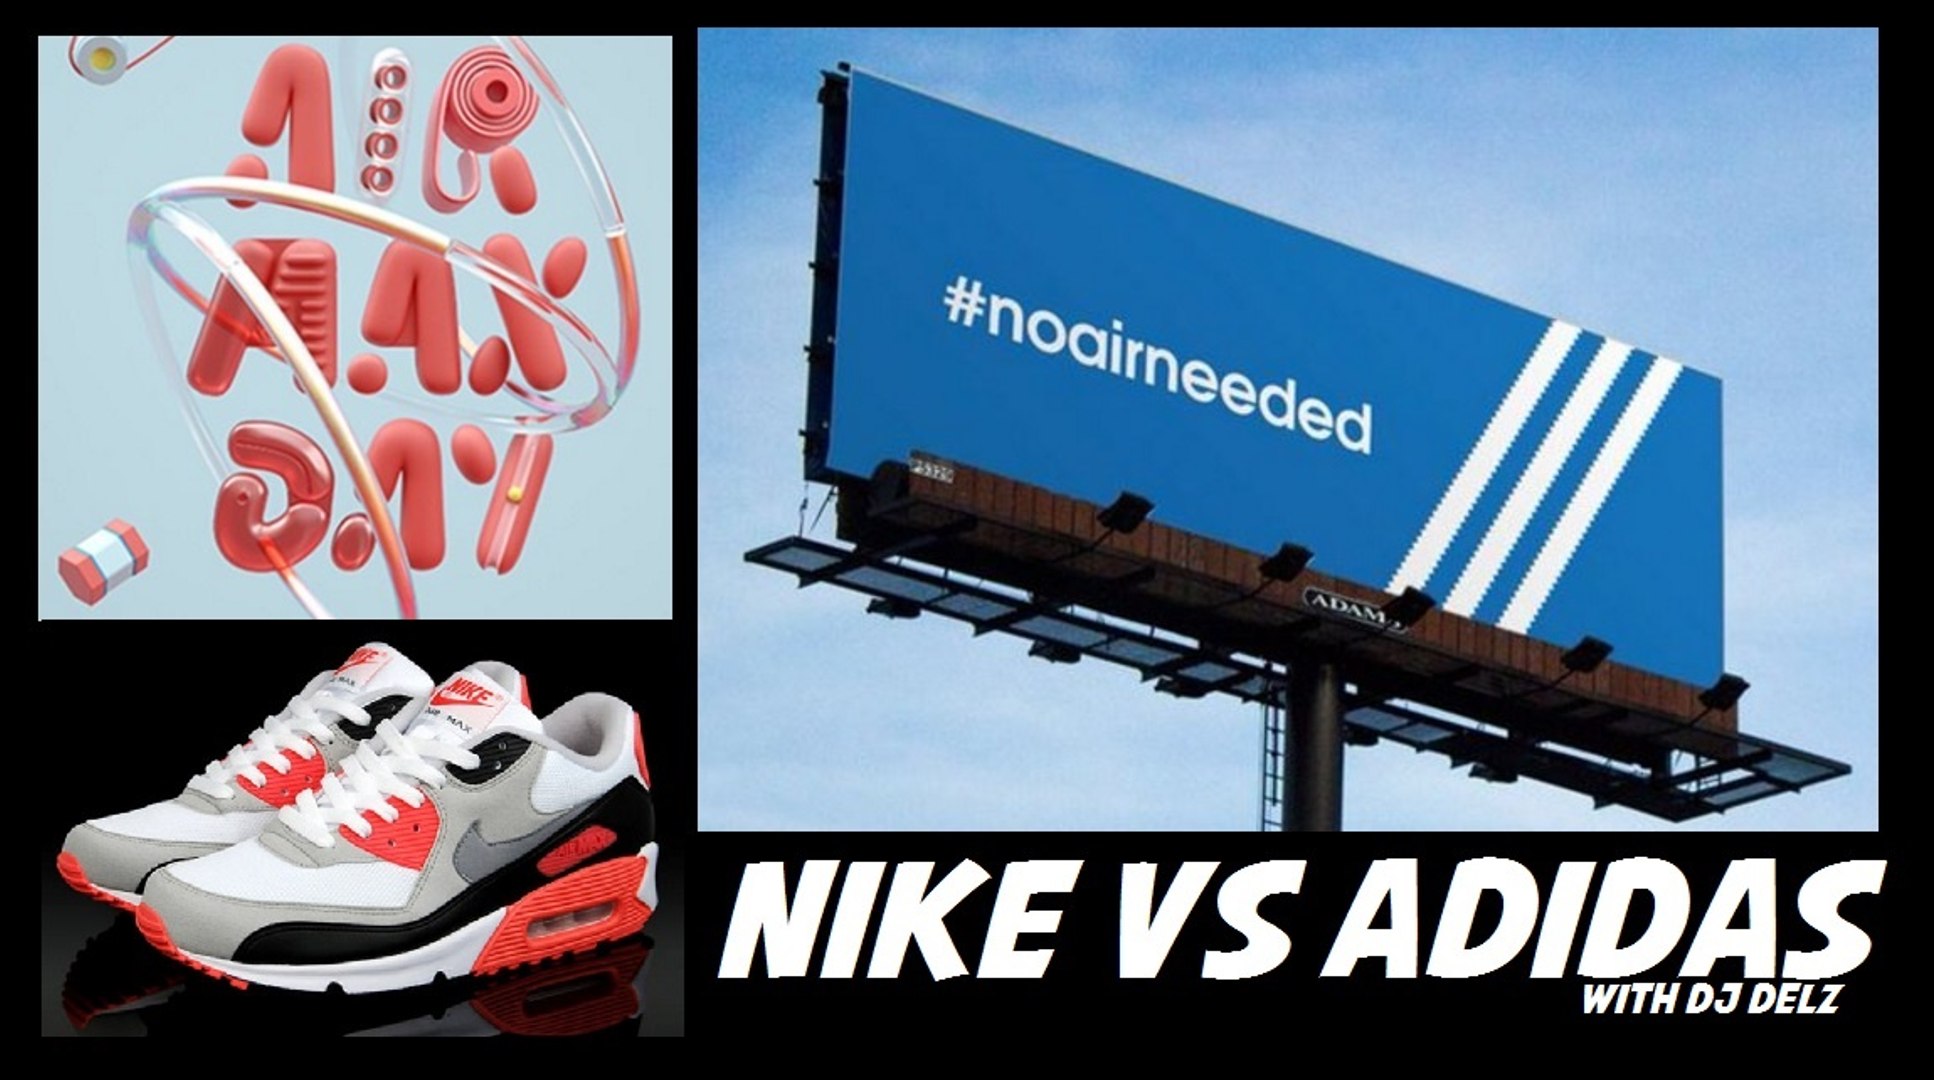 nike air max vs adidas boost